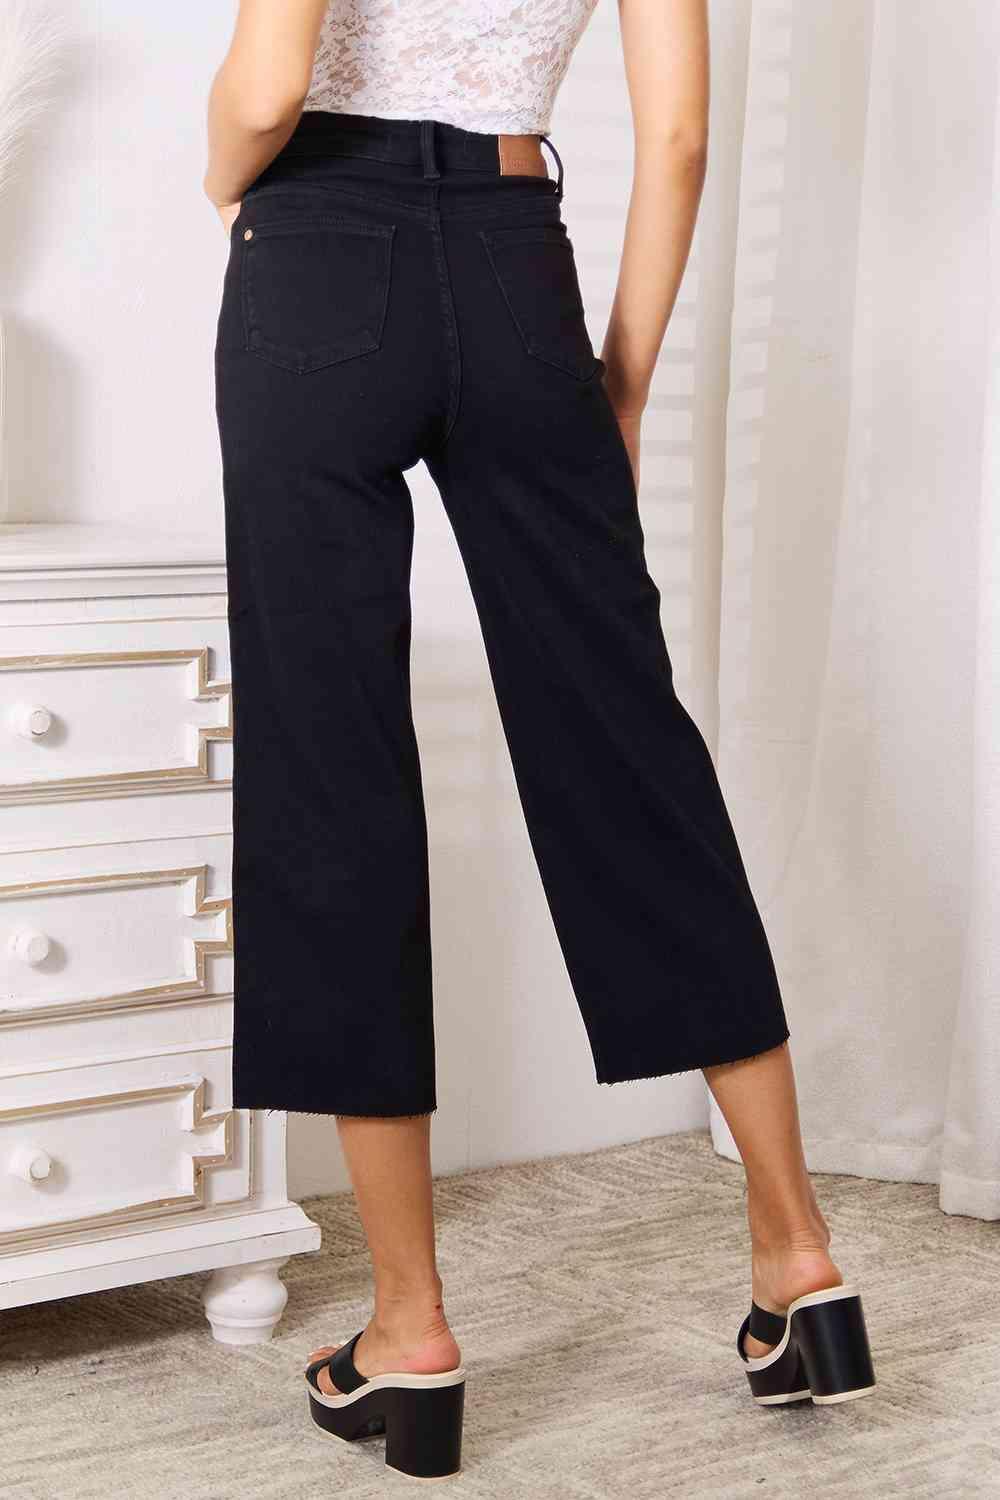 Glide Stylishly High Waist Black Plus Size Crop Jeans - MXSTUDIO.COM